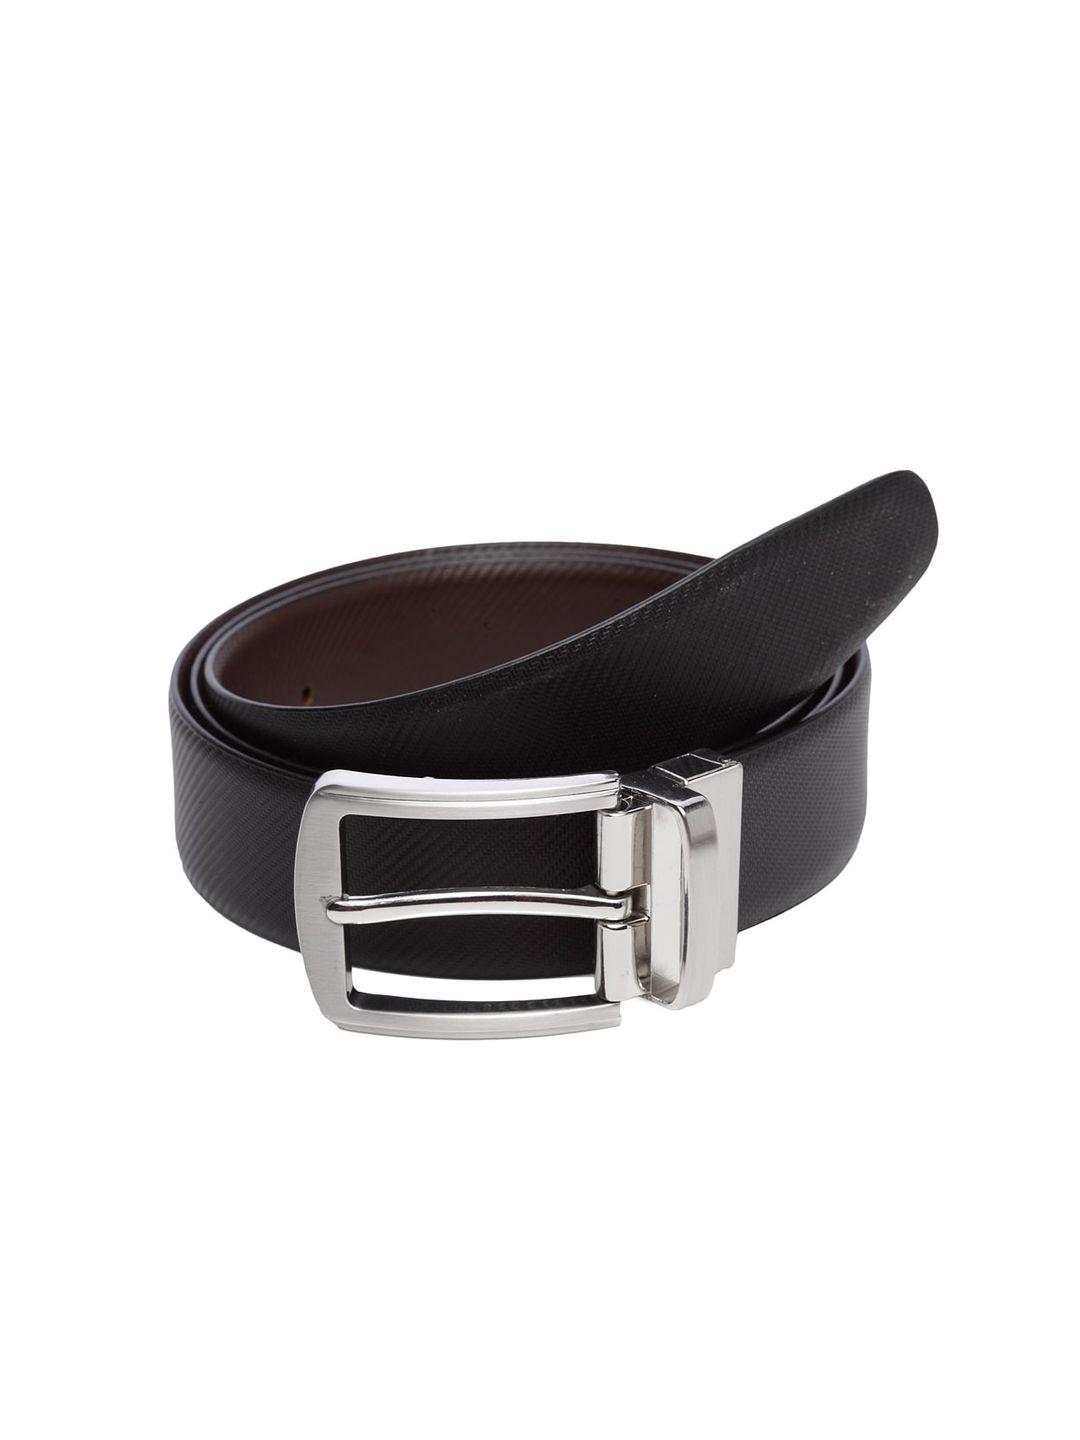 welbawt men black & brown textured reversible leather belt